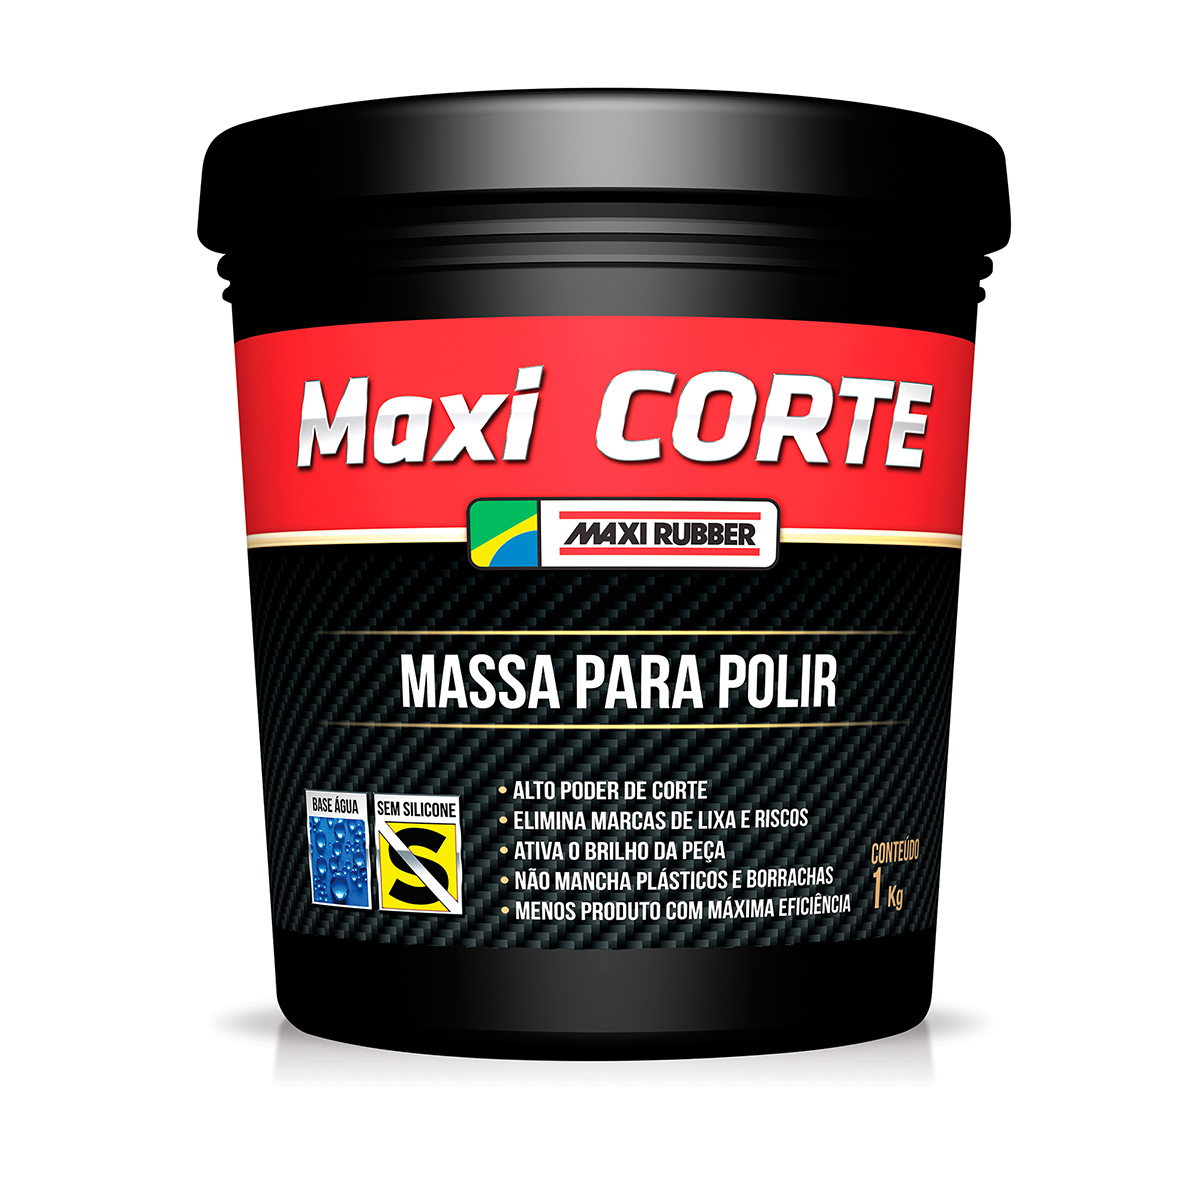 Maxi Corte - Massa para Polir | 1Kg